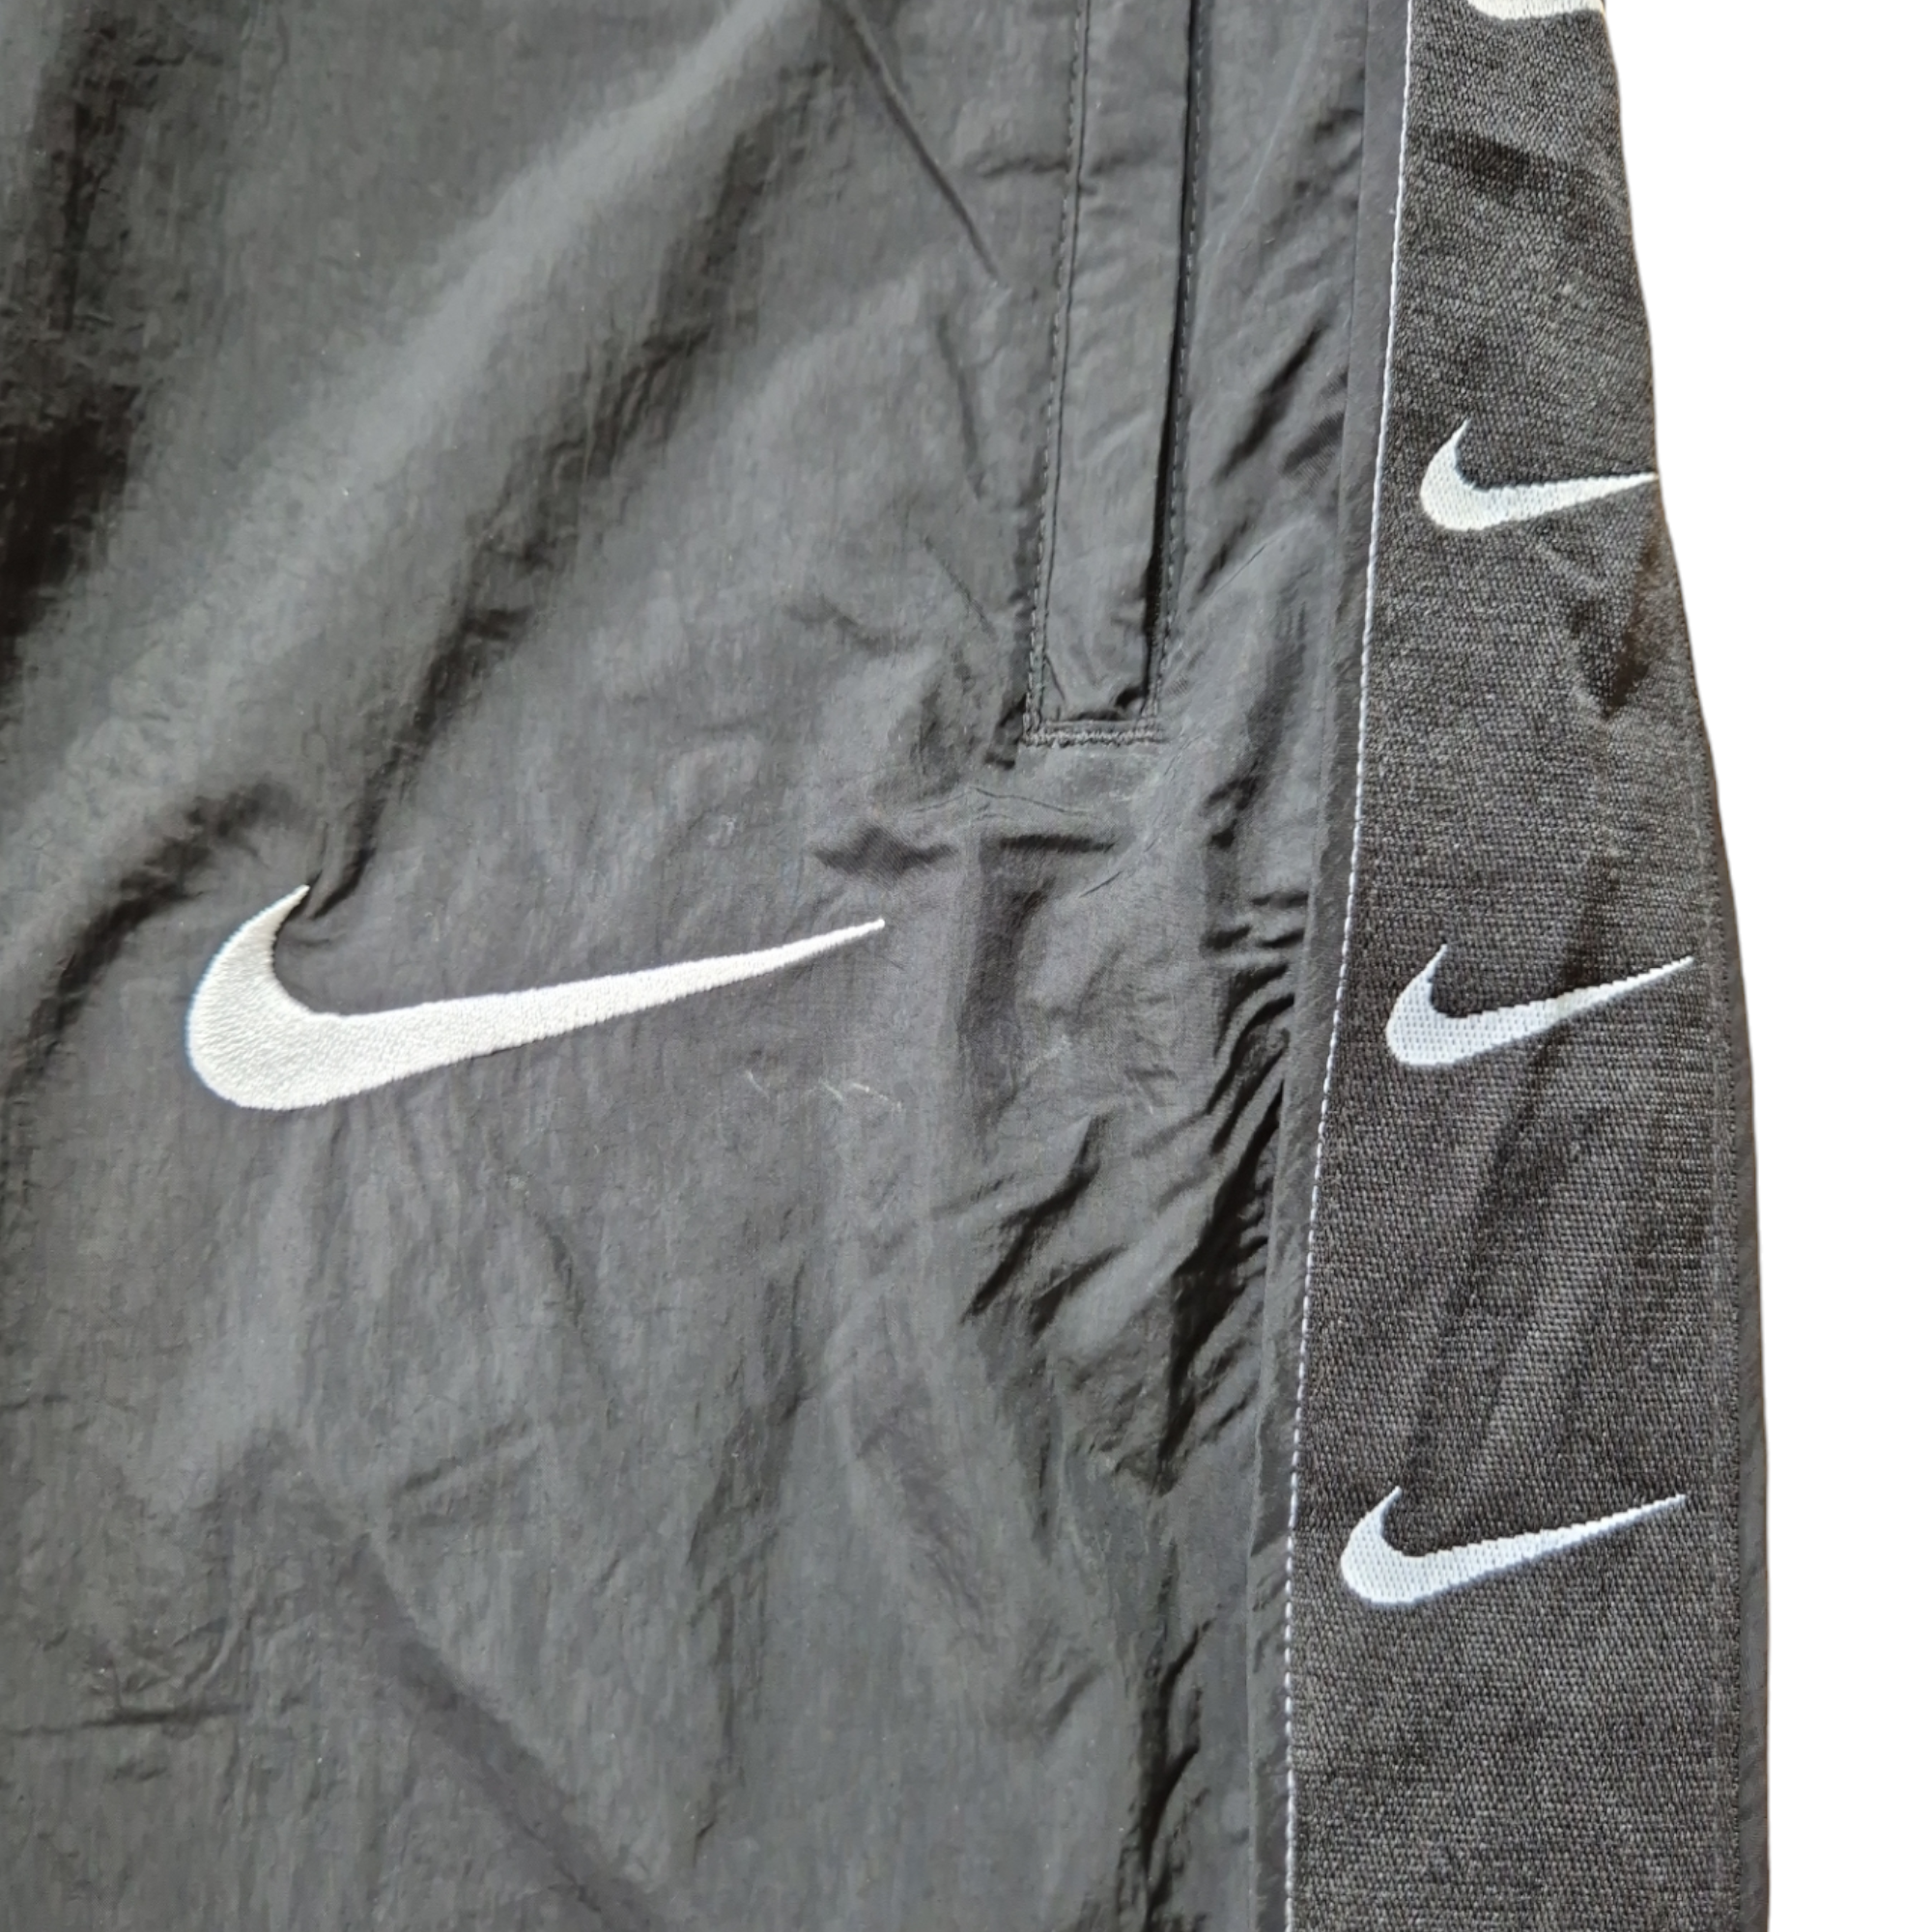 [XL] Nike Trackpants